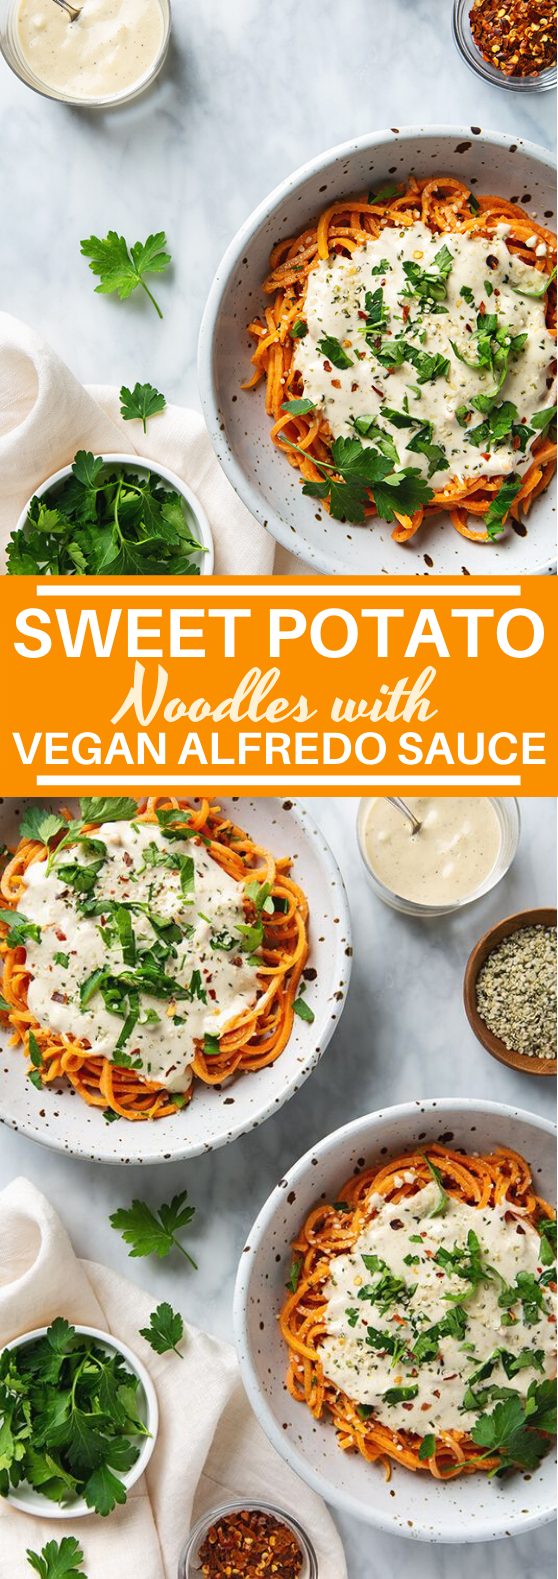 Sweet Potato Noodles with 5-Minute Vegan Alfredo Sauce #vegan #healthy #glutenfree #dinner #pasta